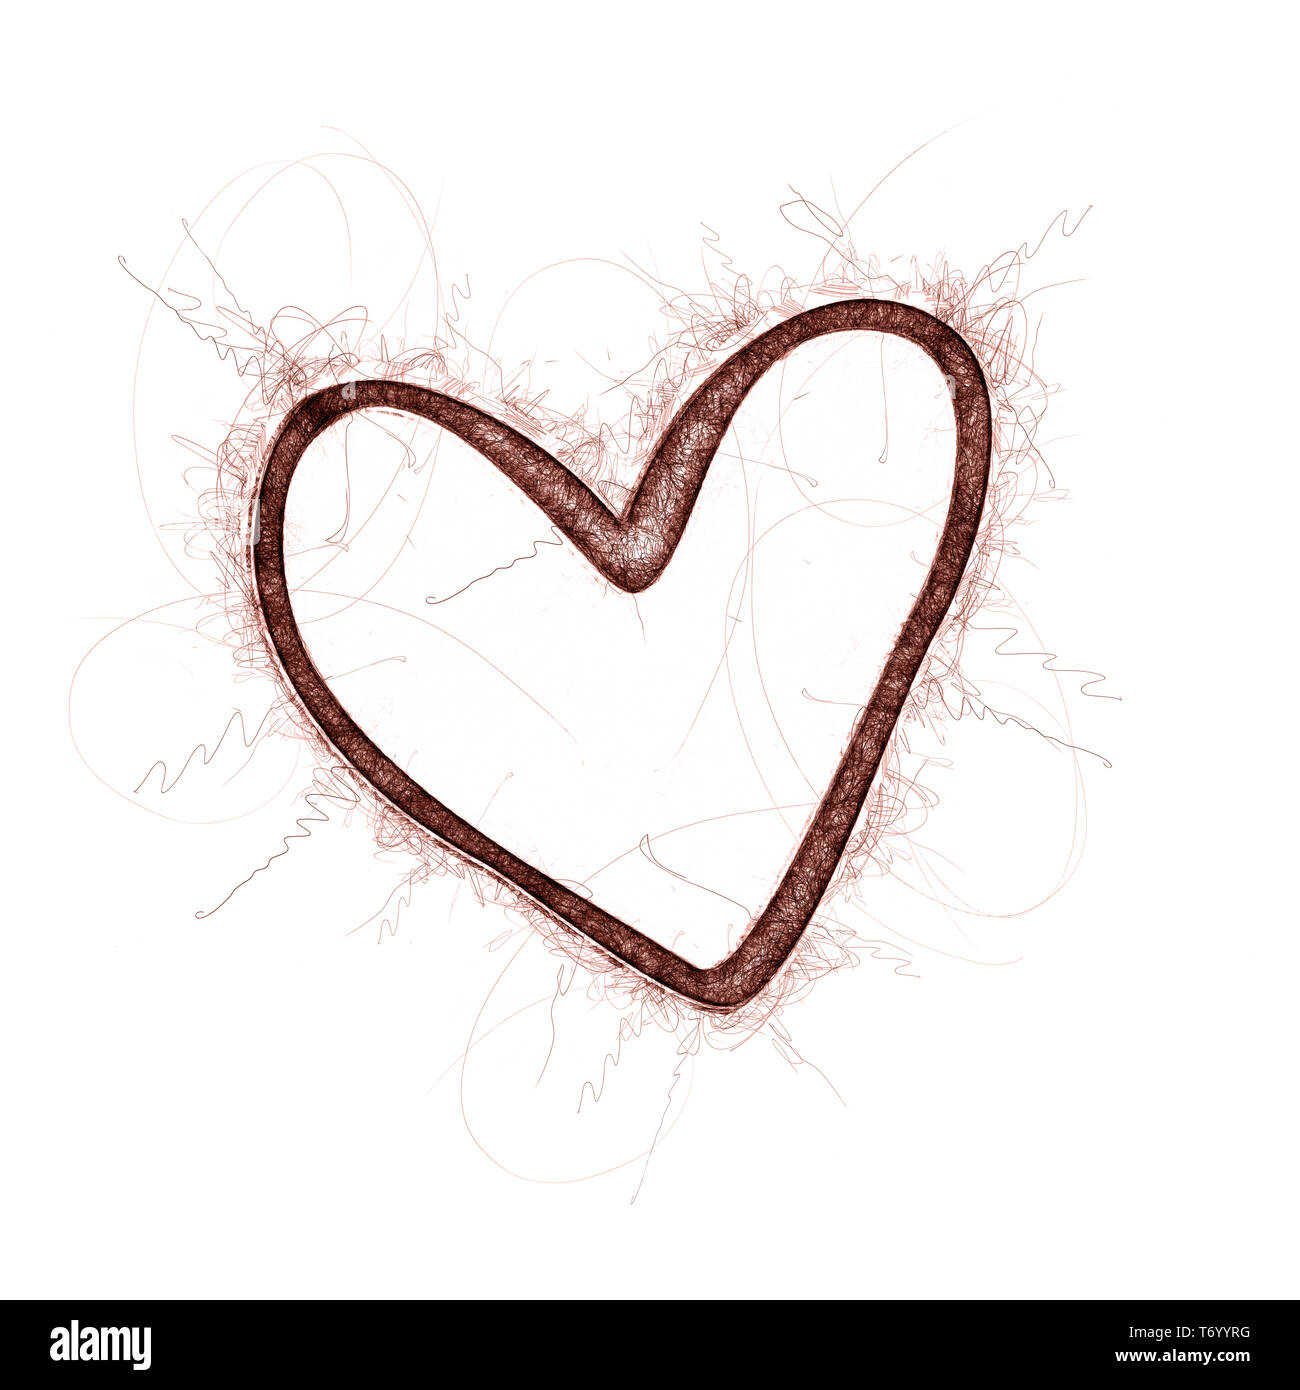 red heart shape ball pen doodle Stock Photo